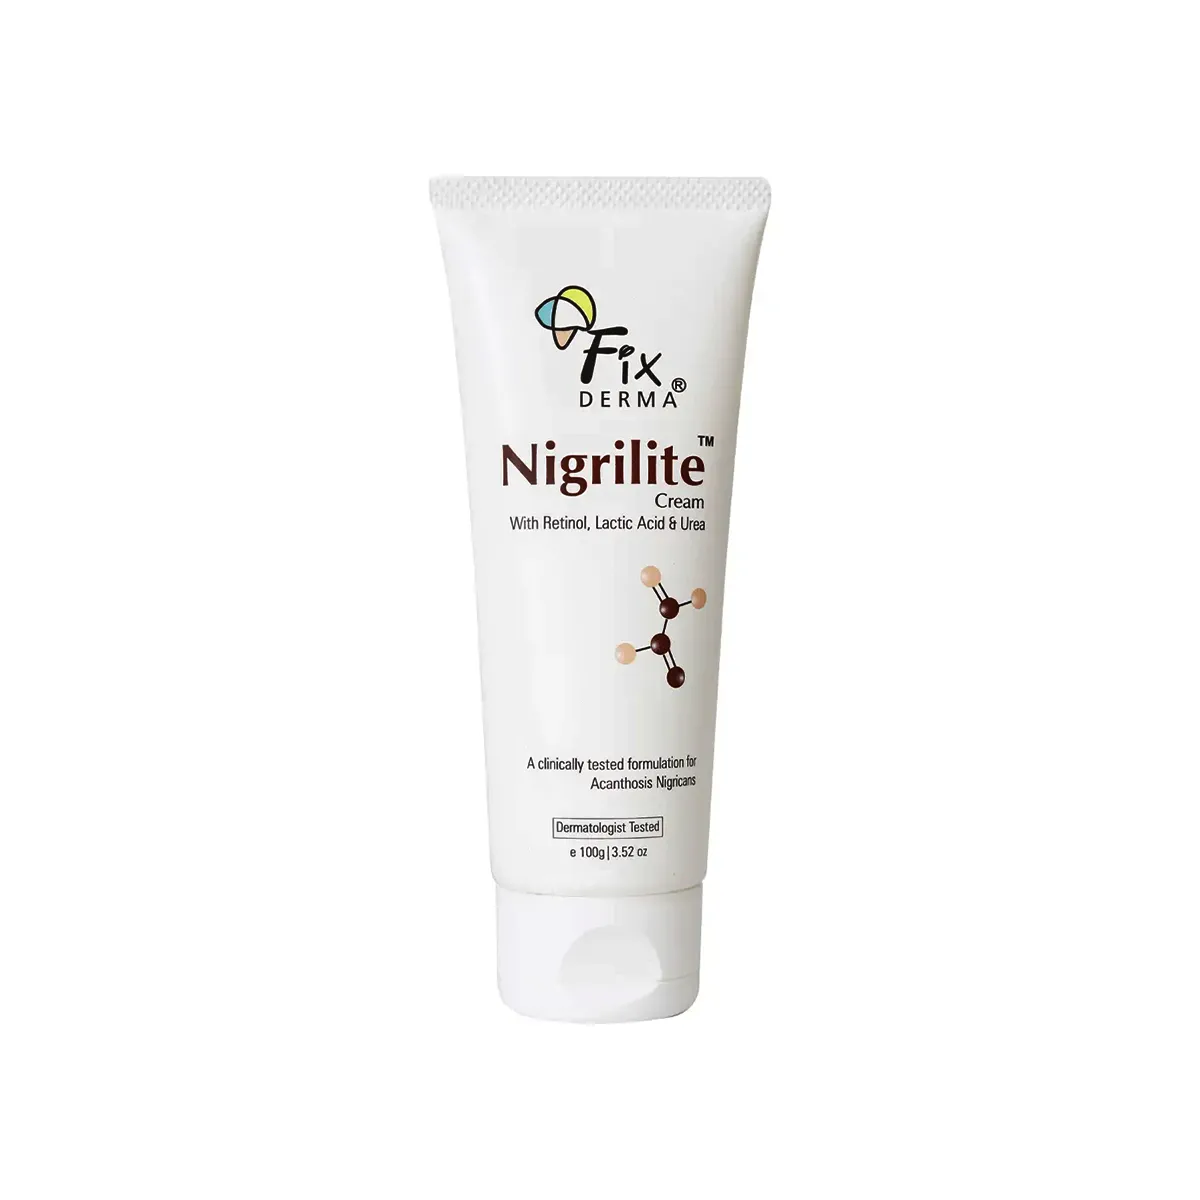 First product image of Fixderma Nigrilite Cream 100g